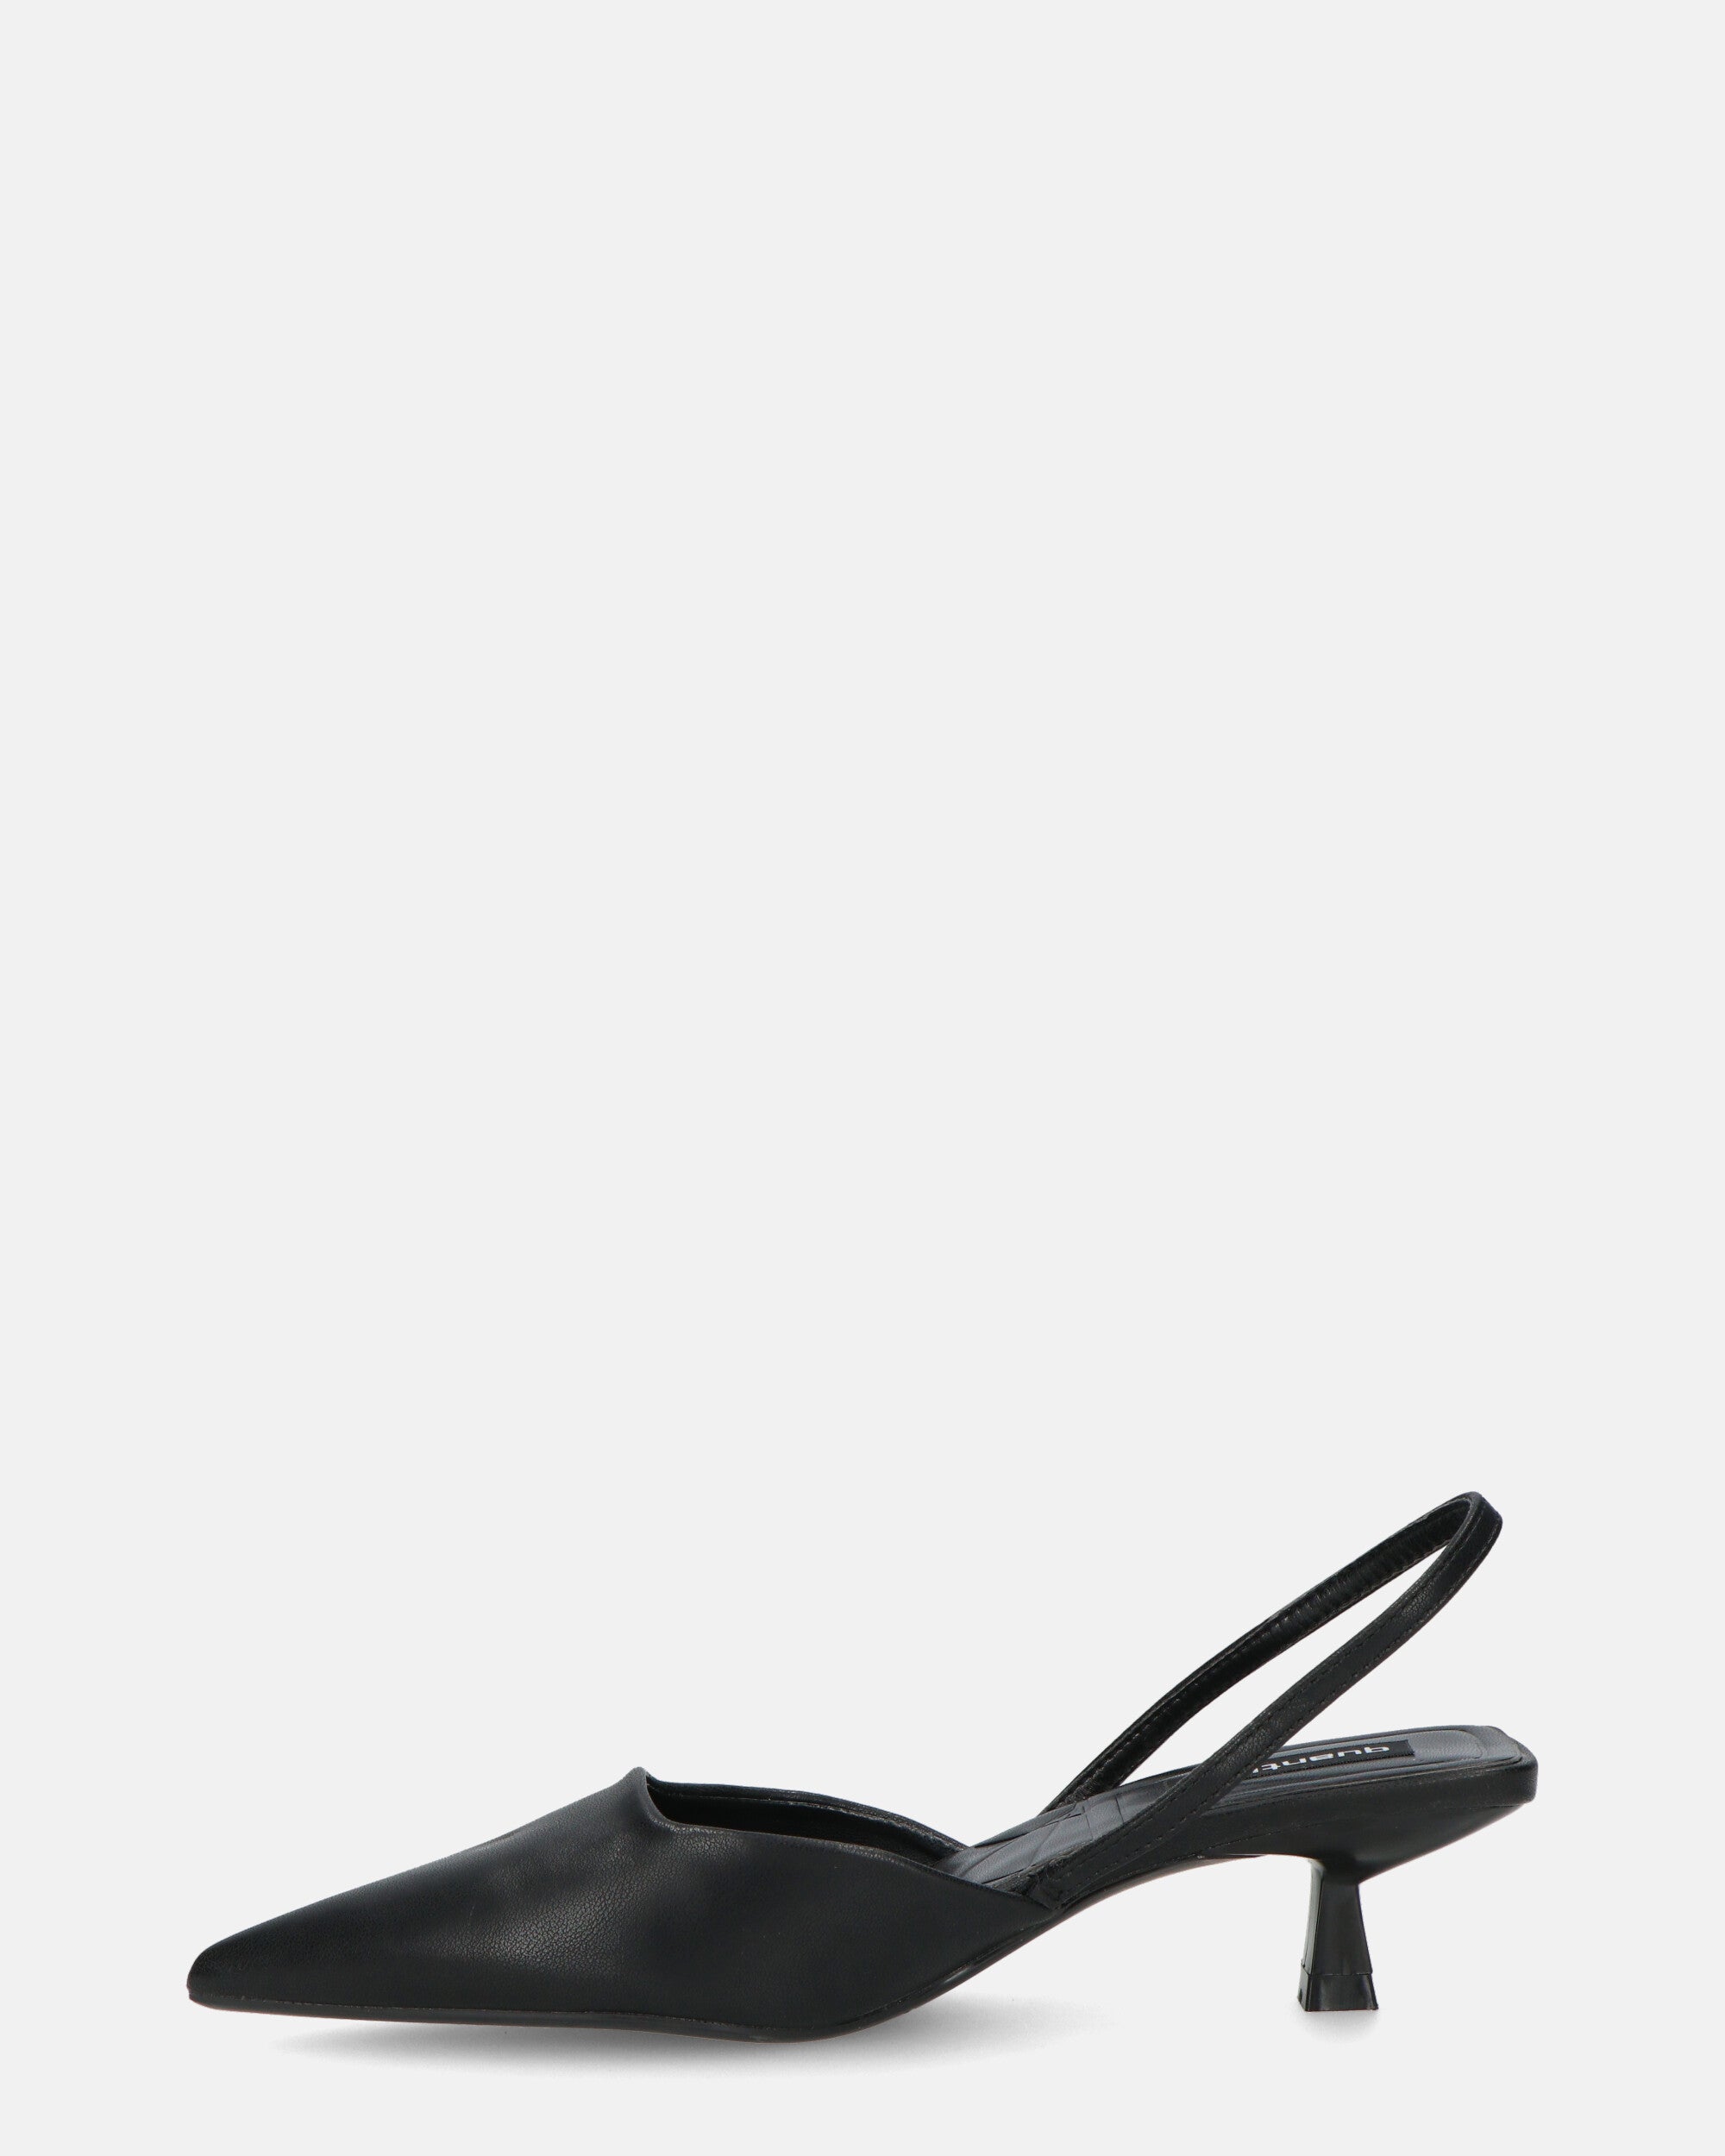 NIEVES - zapatos destalonados negros con tacón gatito